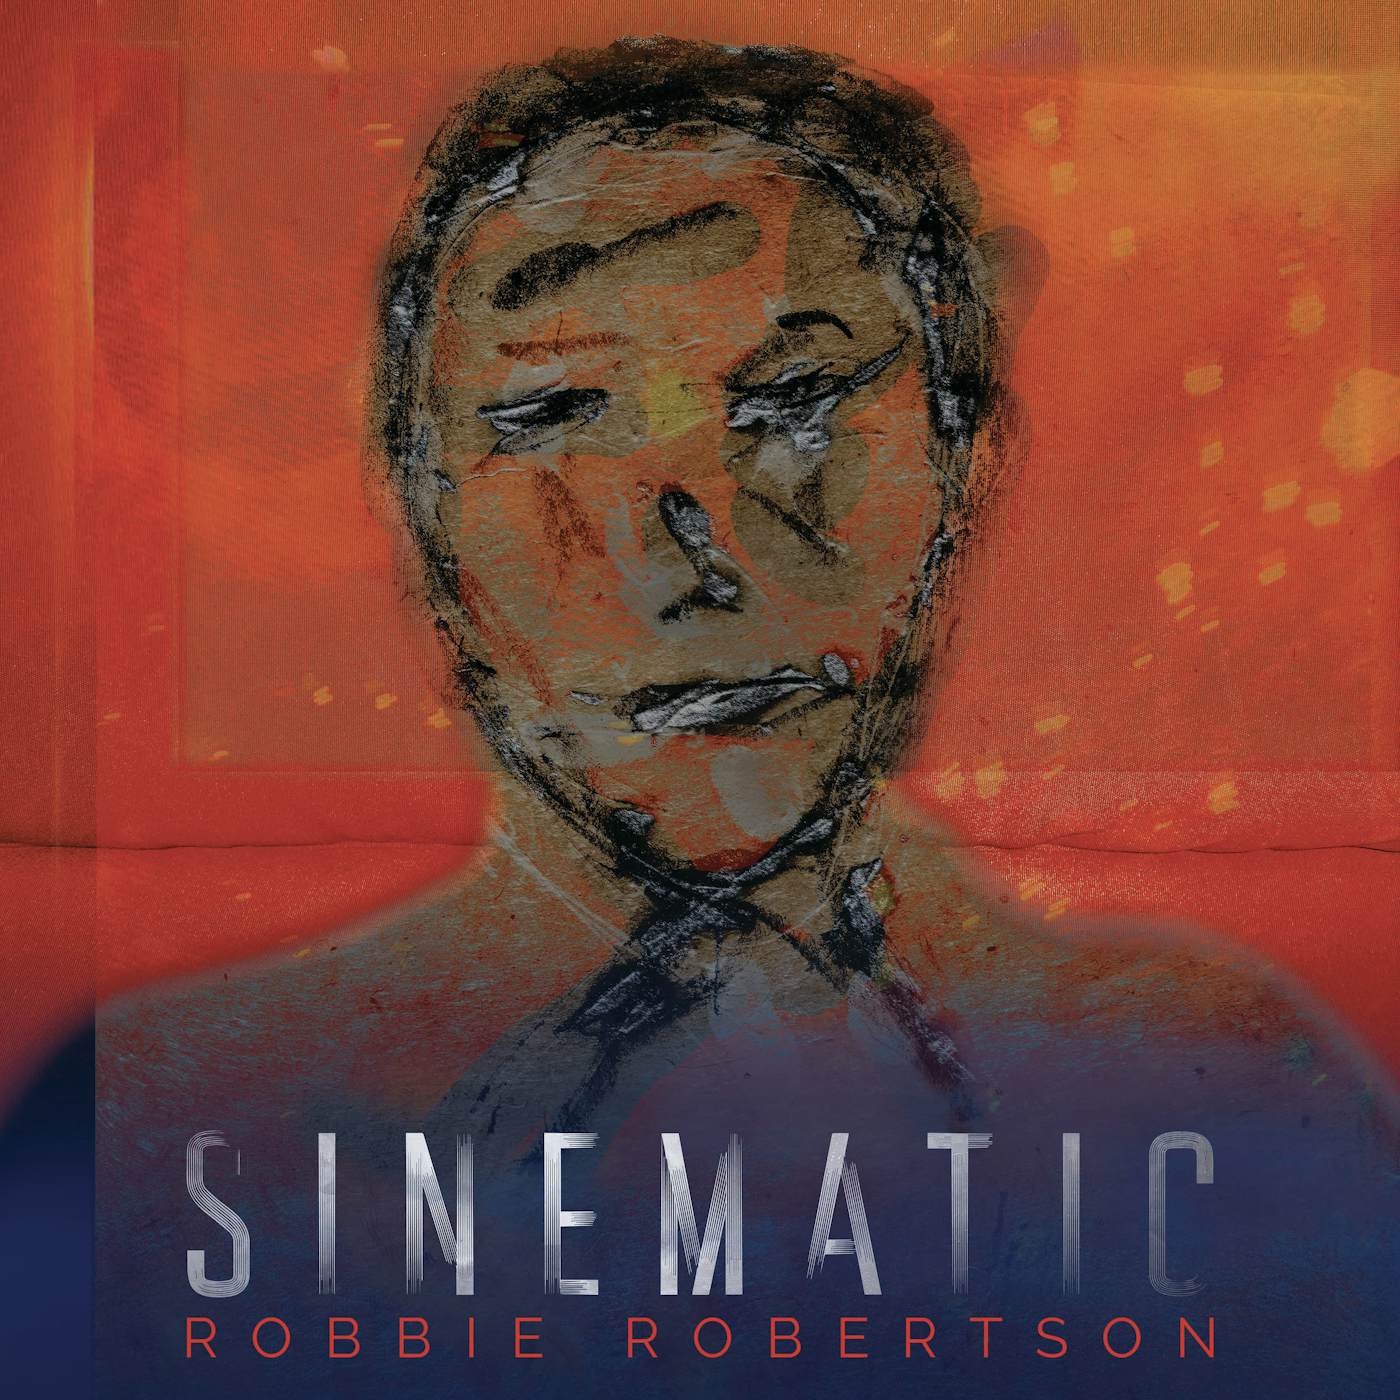 Robbie Robertson Sinematic Vinyl Record